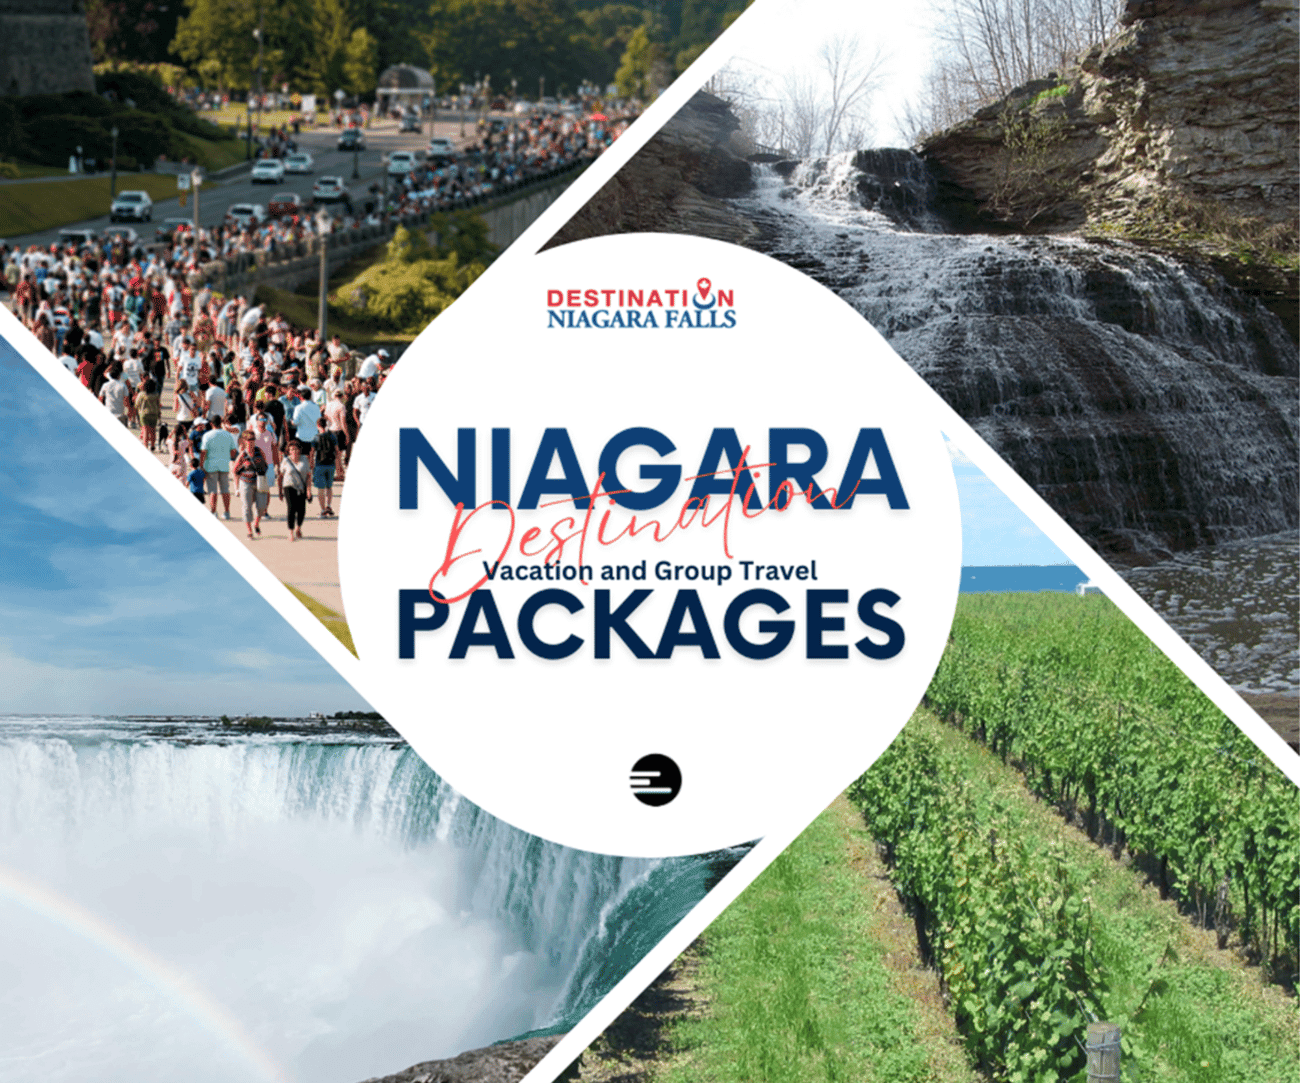 Press Release | Destination Niagara Falls & Ownera Media